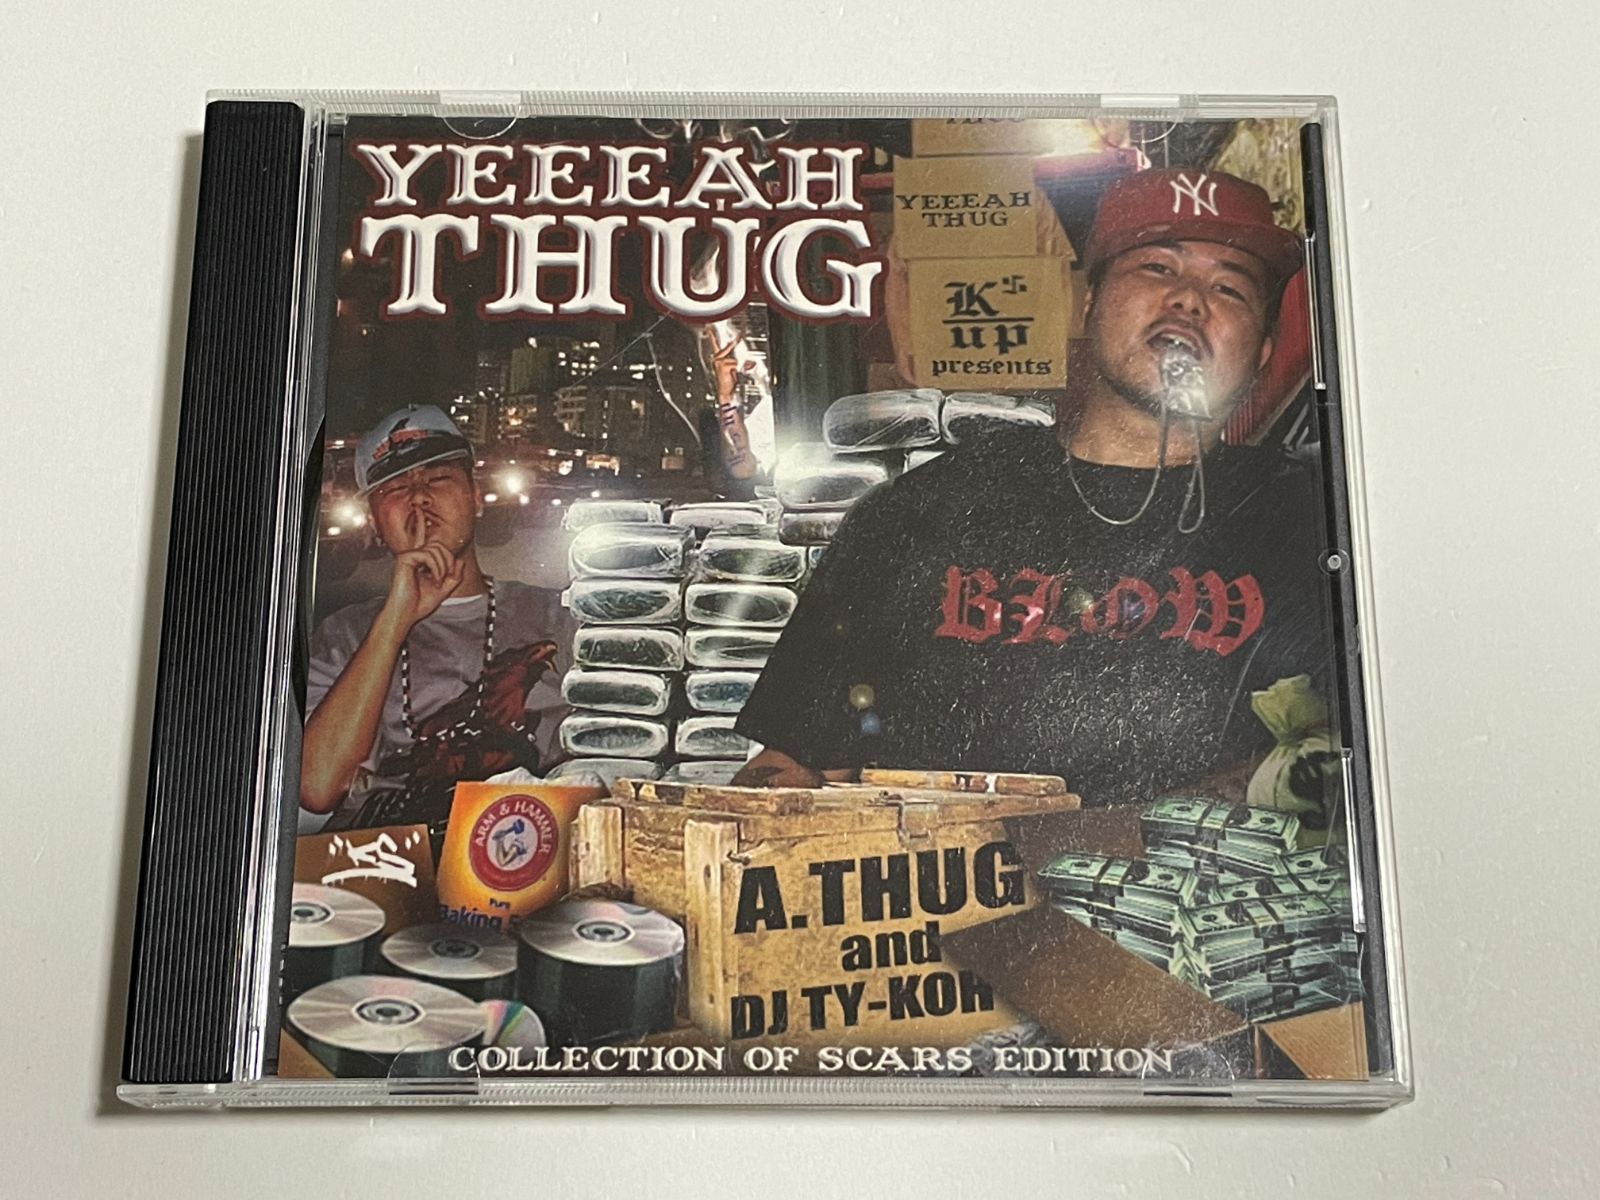 CD『A-THUG - YEEEAH THUG Mixed By DJ TY-KOH』 - メルカリ